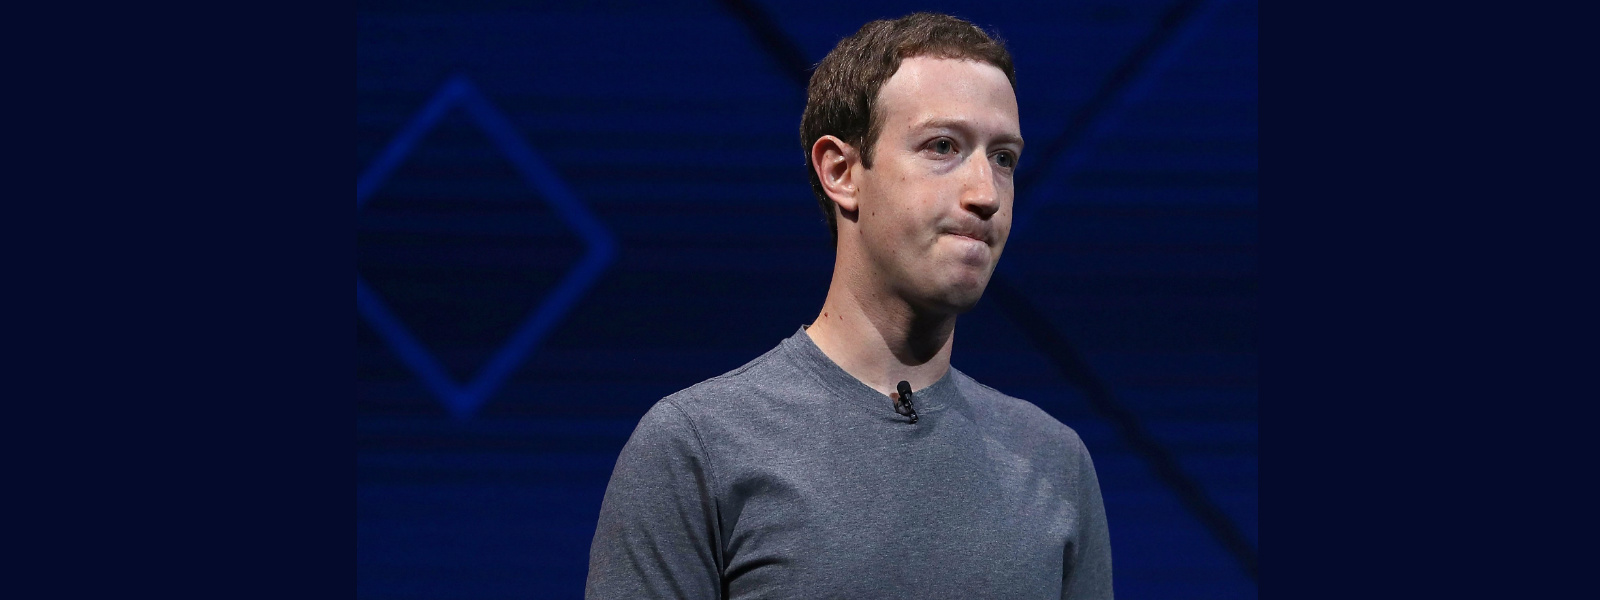 Mark Zuckerberg admits they "made mistakes"